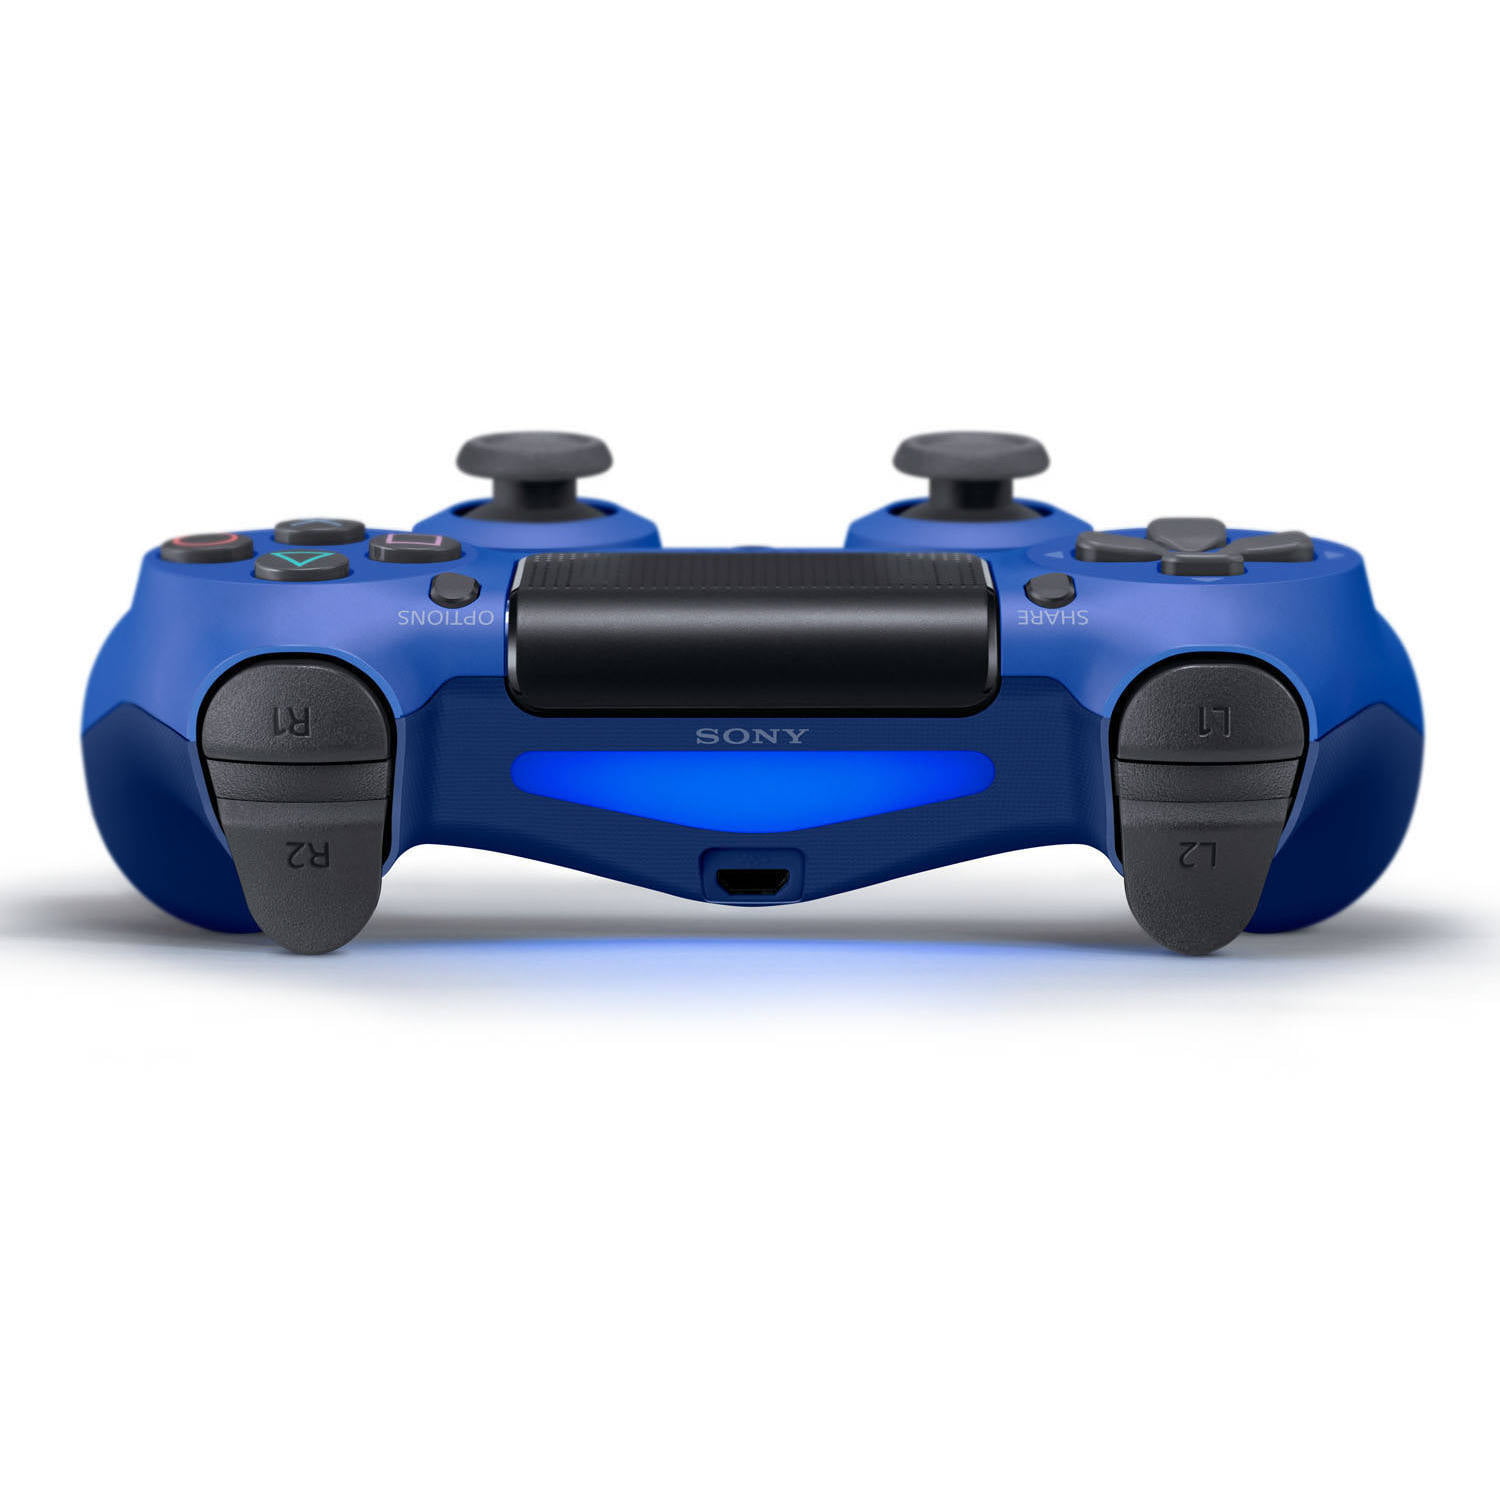 Sony Dualshock 4 Controller For Ps4 Blue Wave Walmart Com Walmart Com